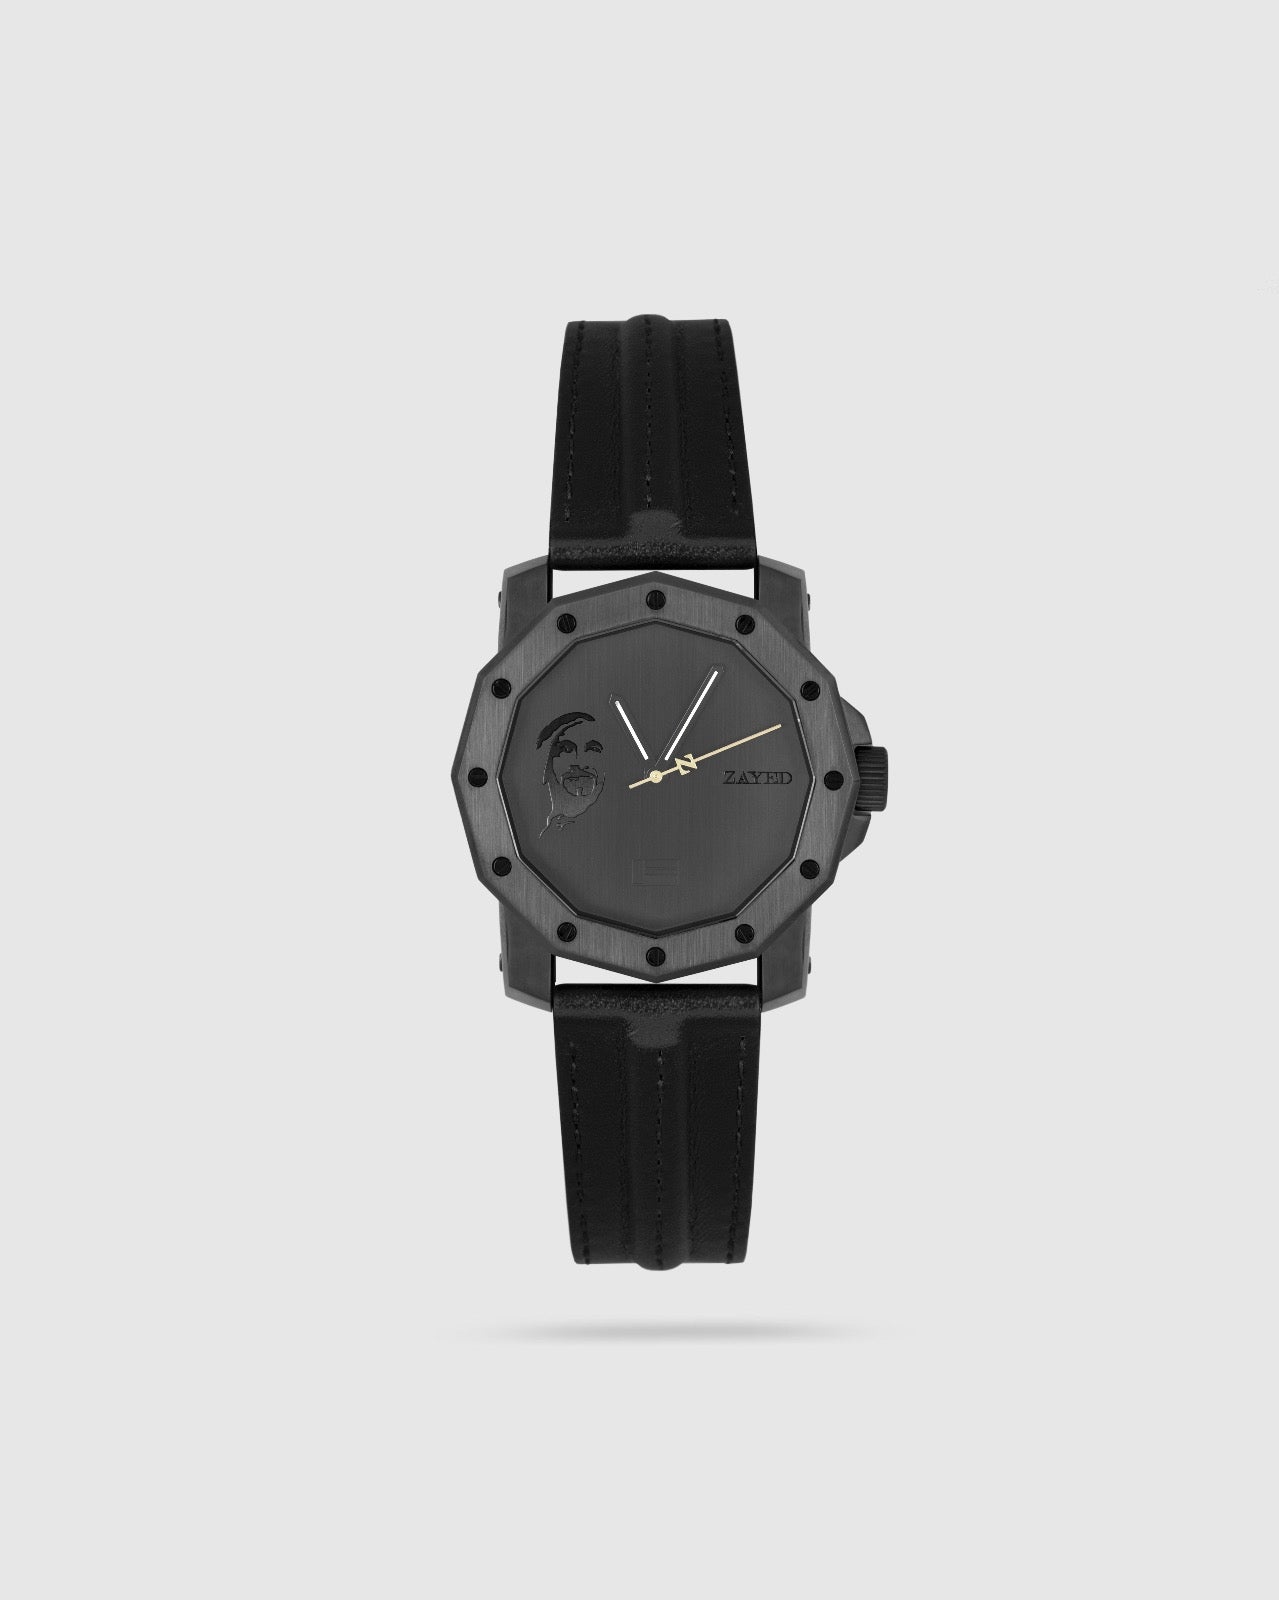 Zayed Leather Watch